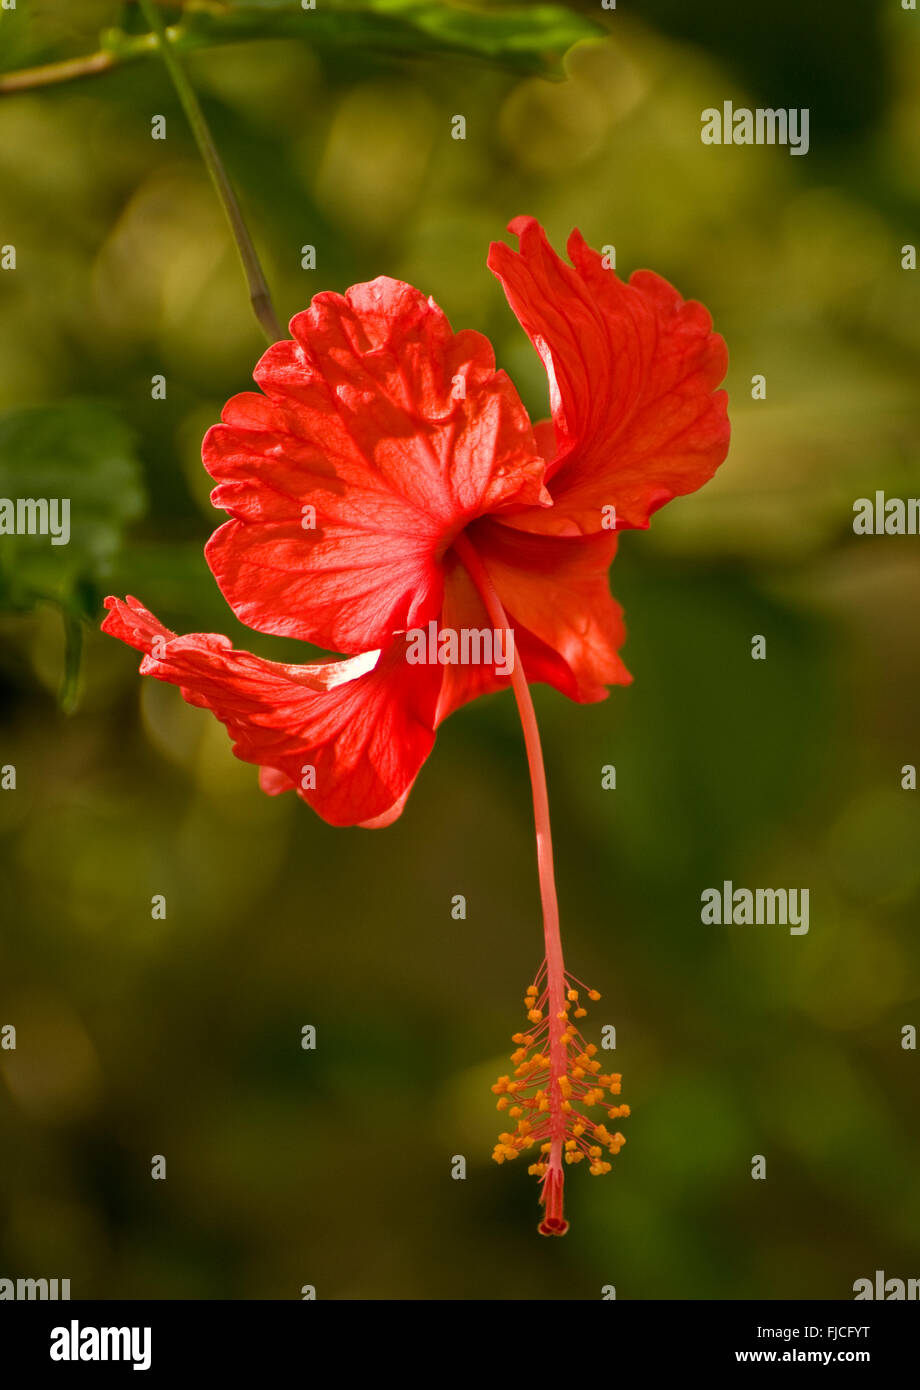 Red Hibiscus Flower in rainforest jungle setting, Costa Rica Stock Photo